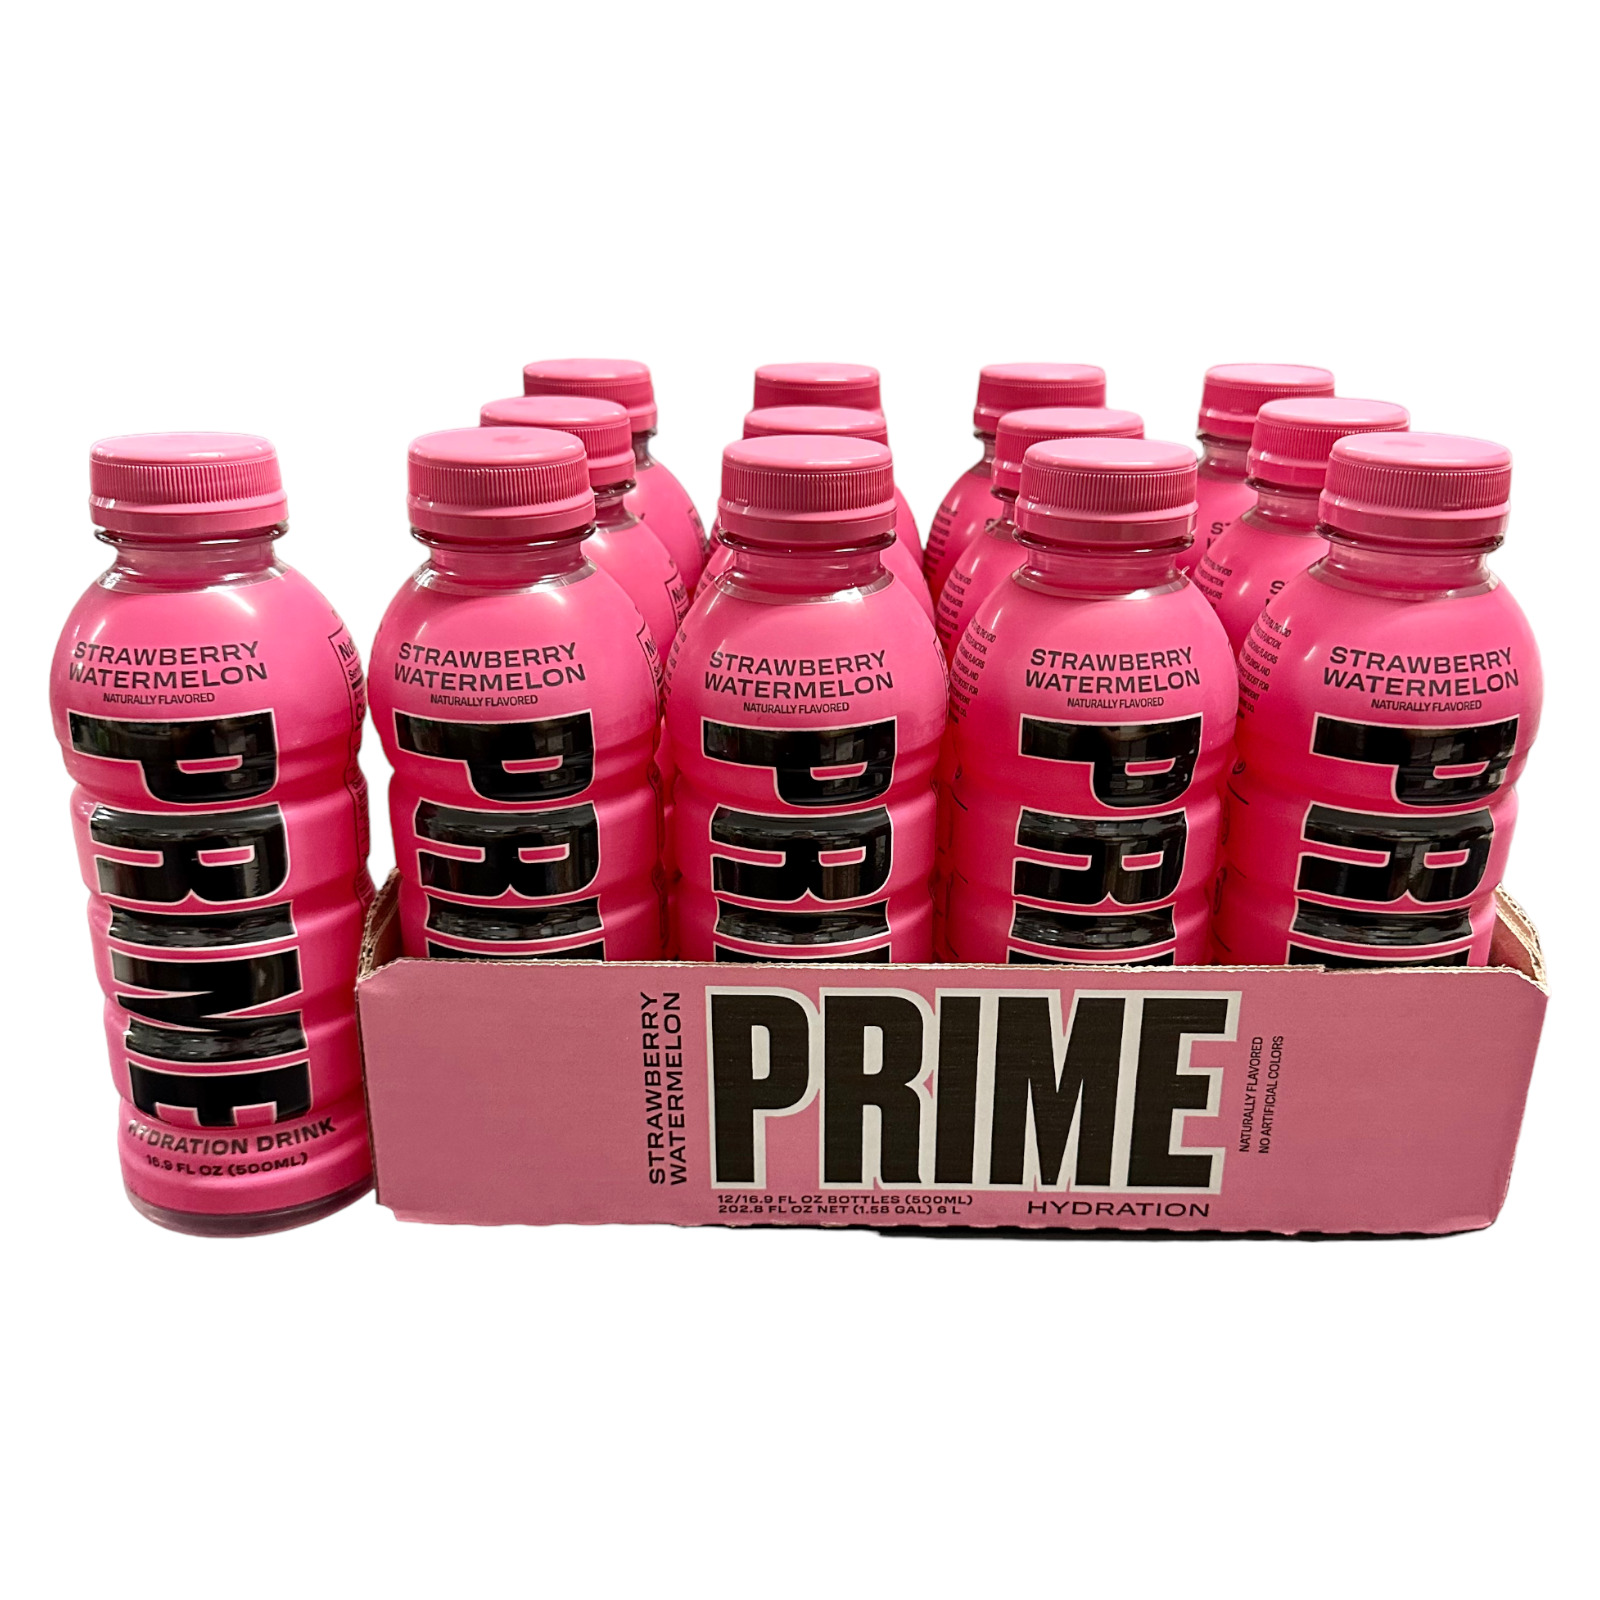 Prime Hydration Drink By Logan Paul x KSI 16.9oz Bottles 12 Pack